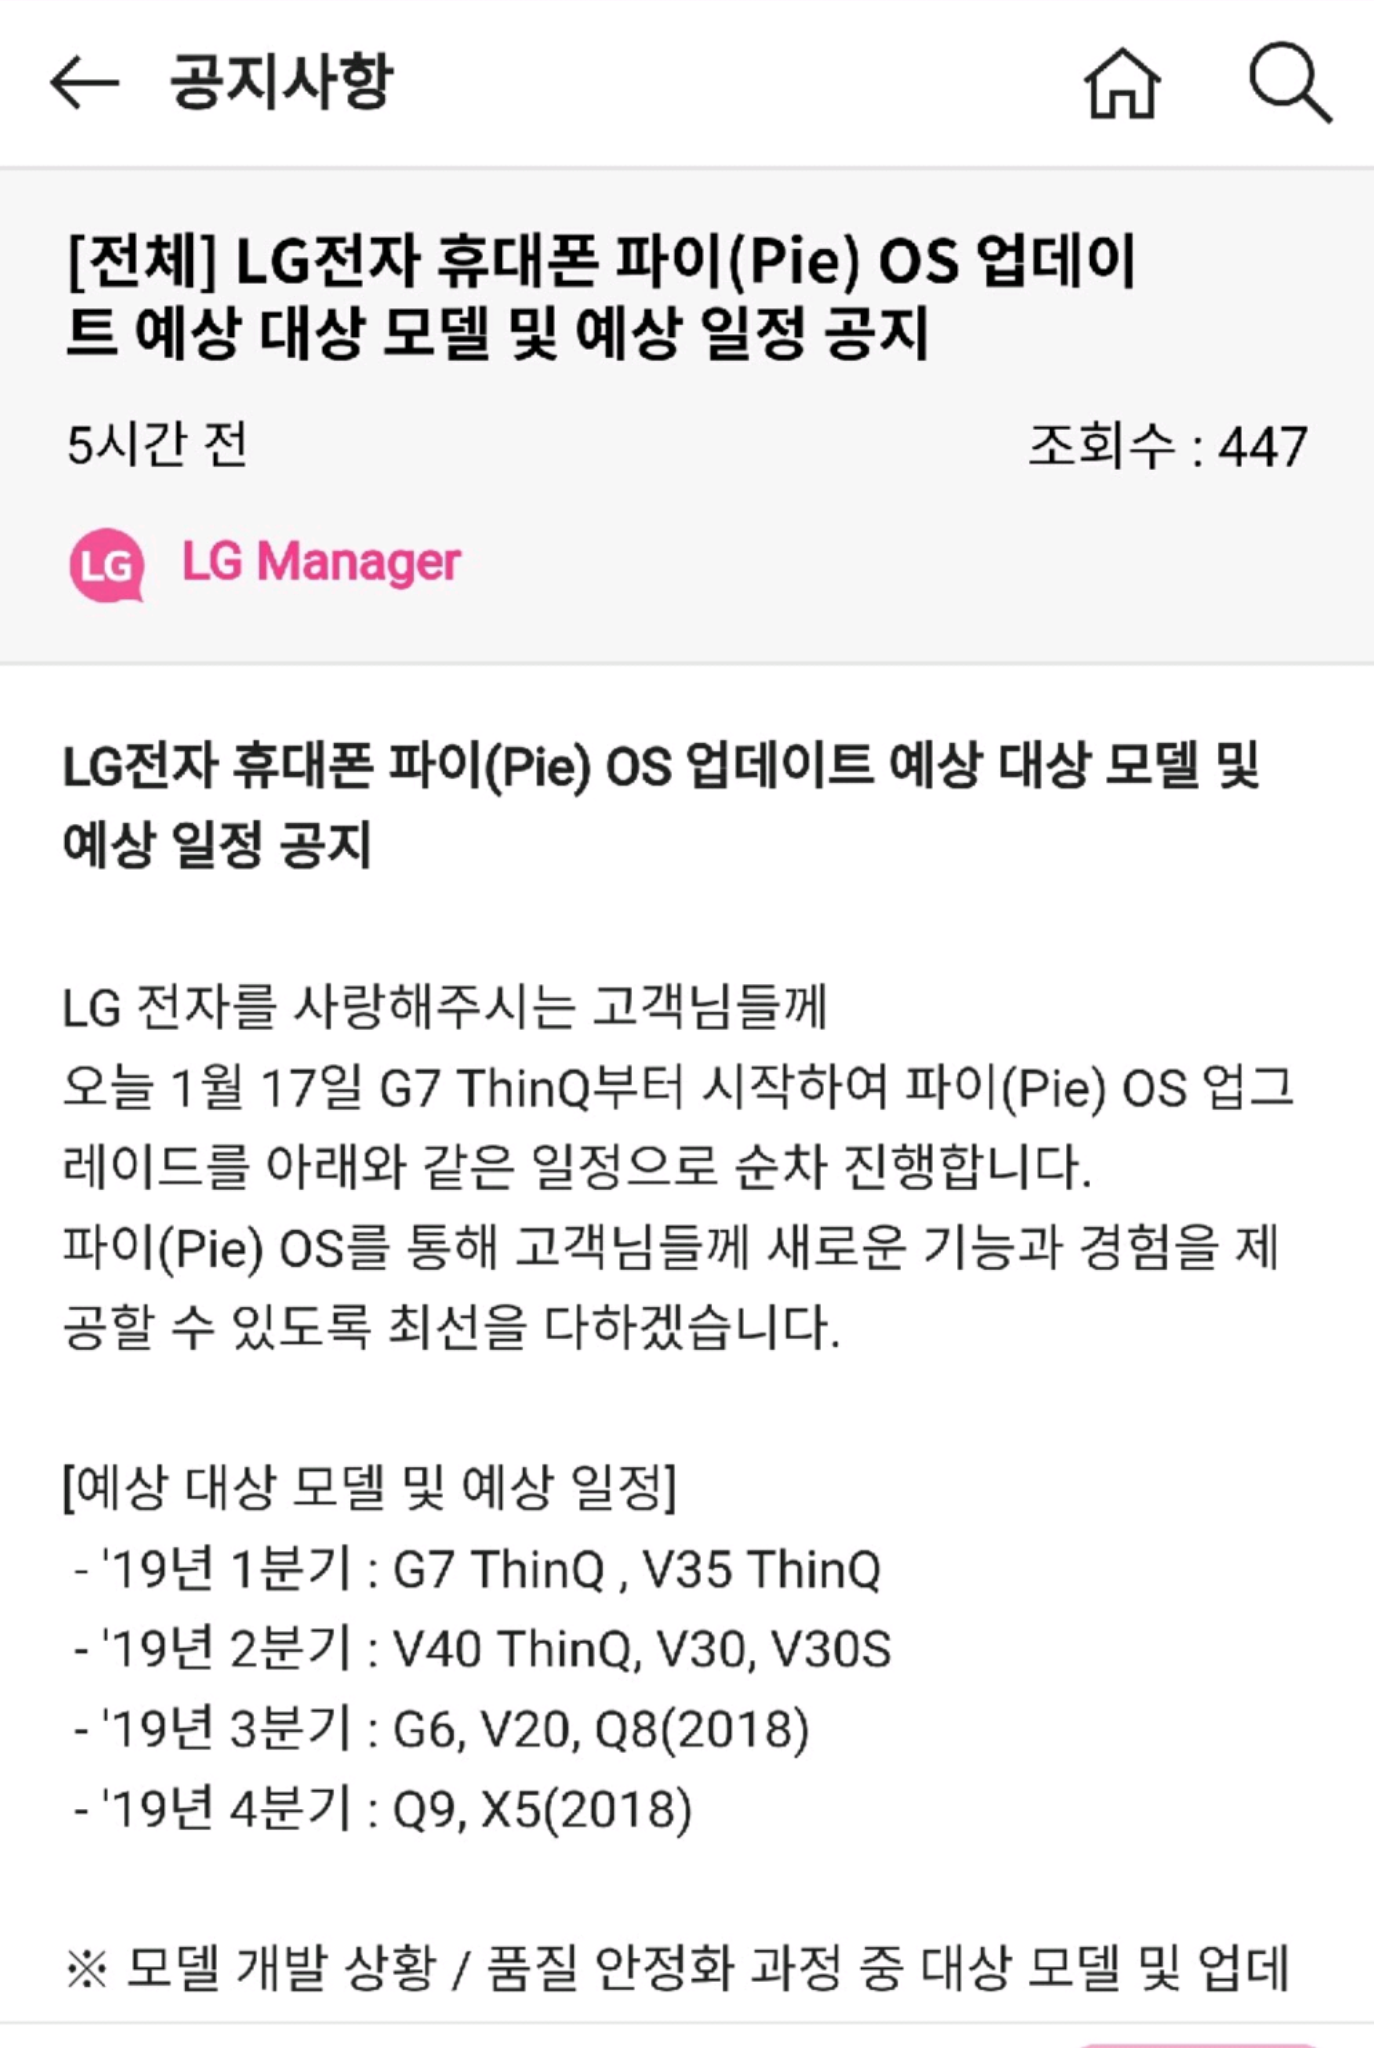 LG V35 Pie update